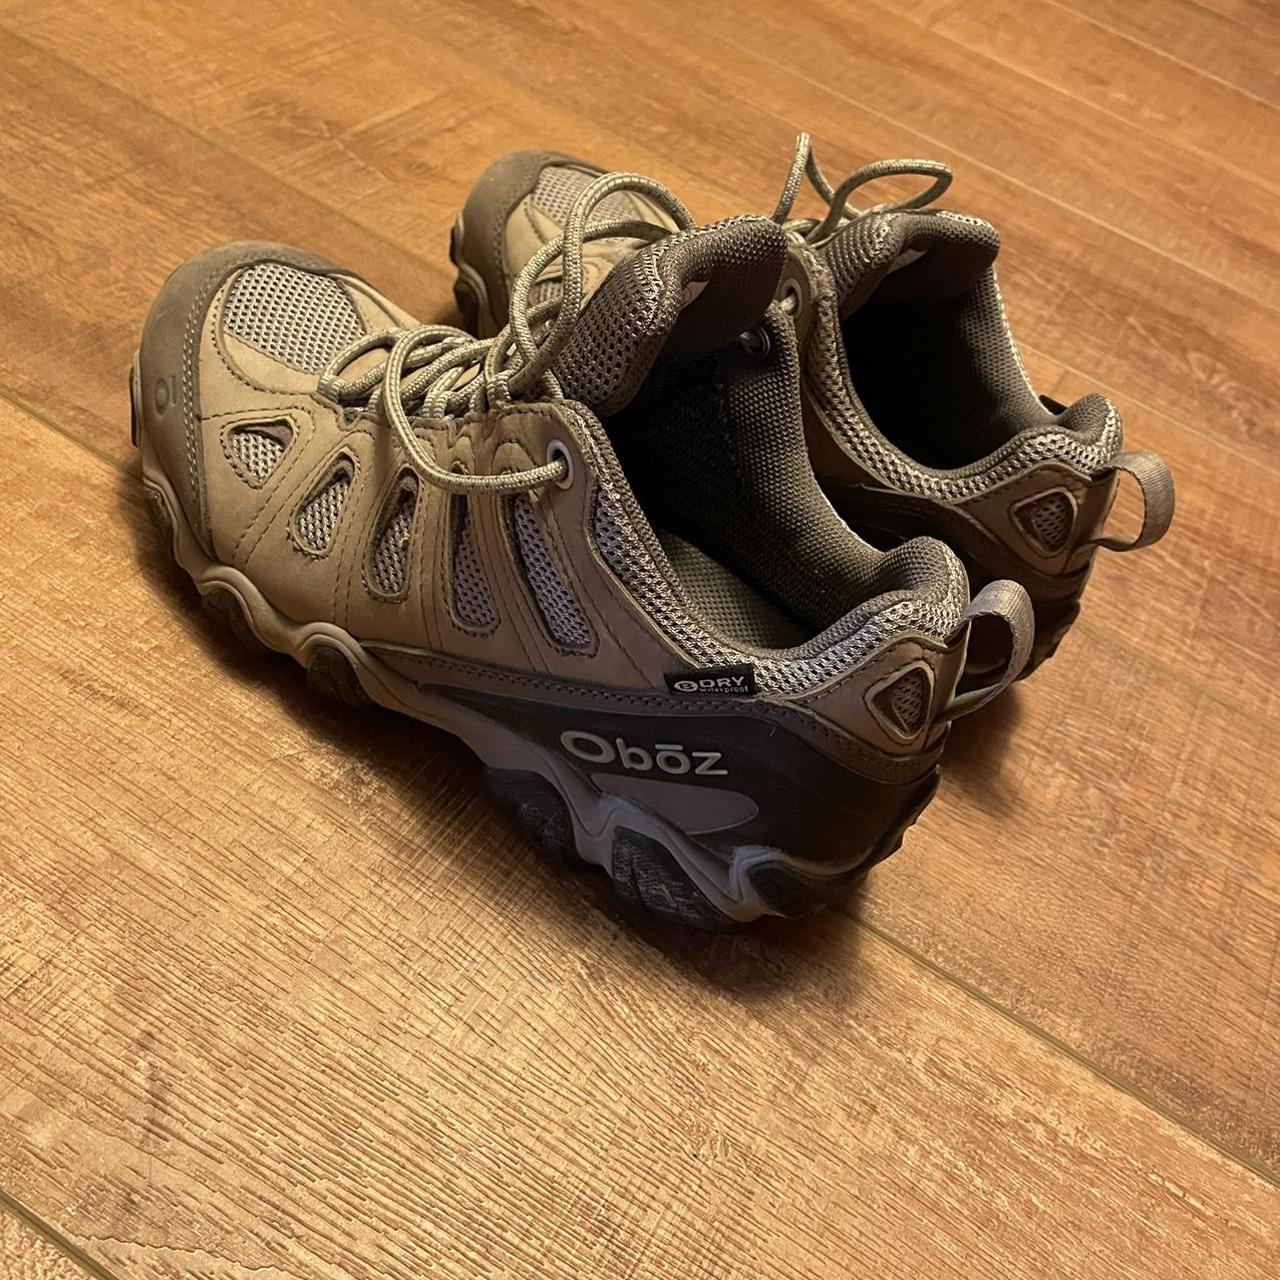 Oboz hiking boots - Depop